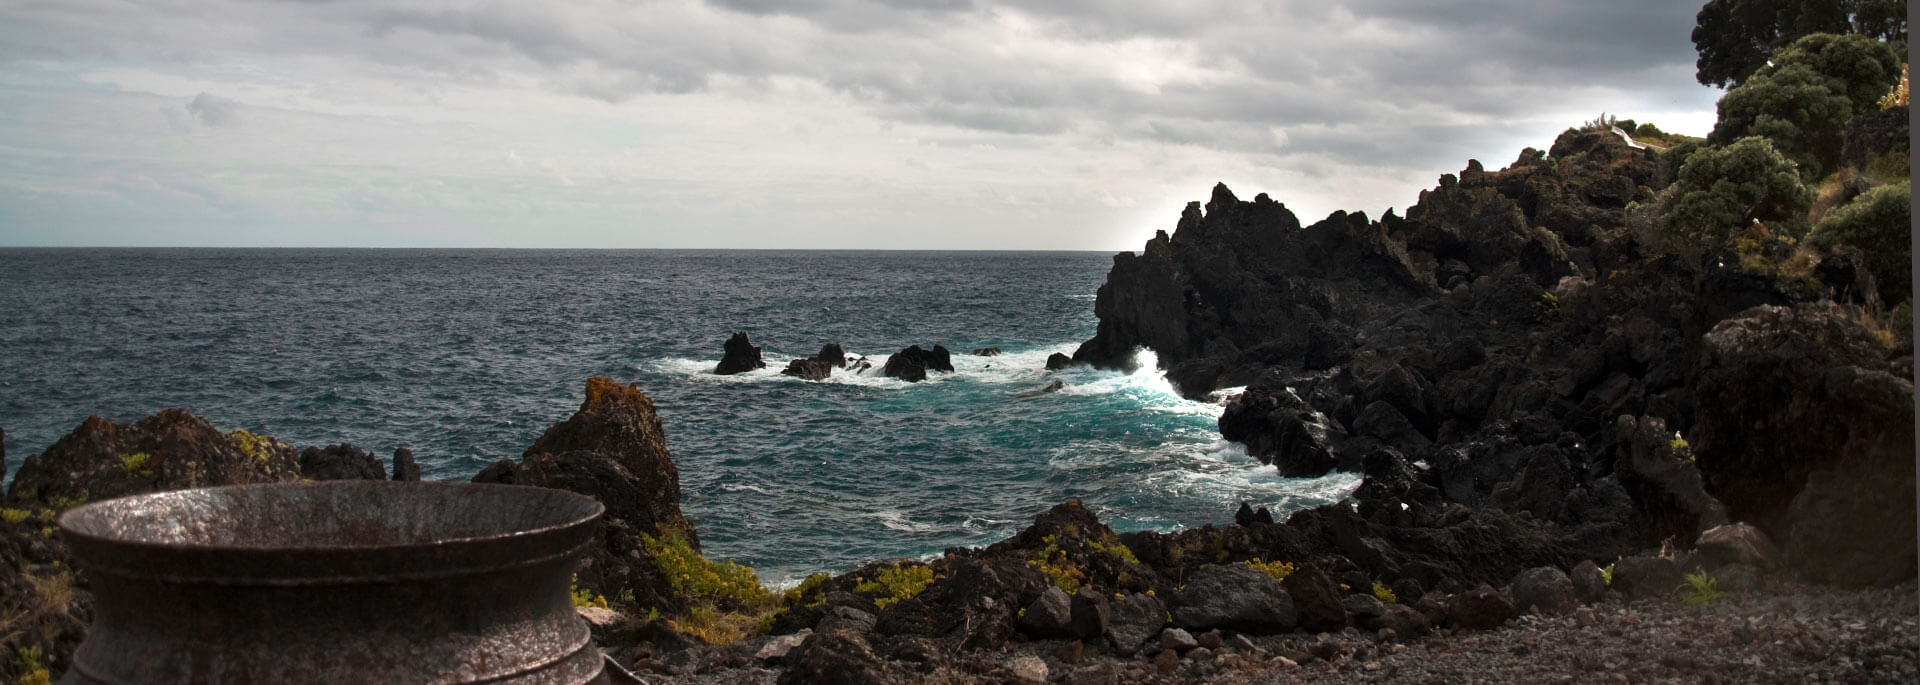 Fotos: Azoren-Insel Pico